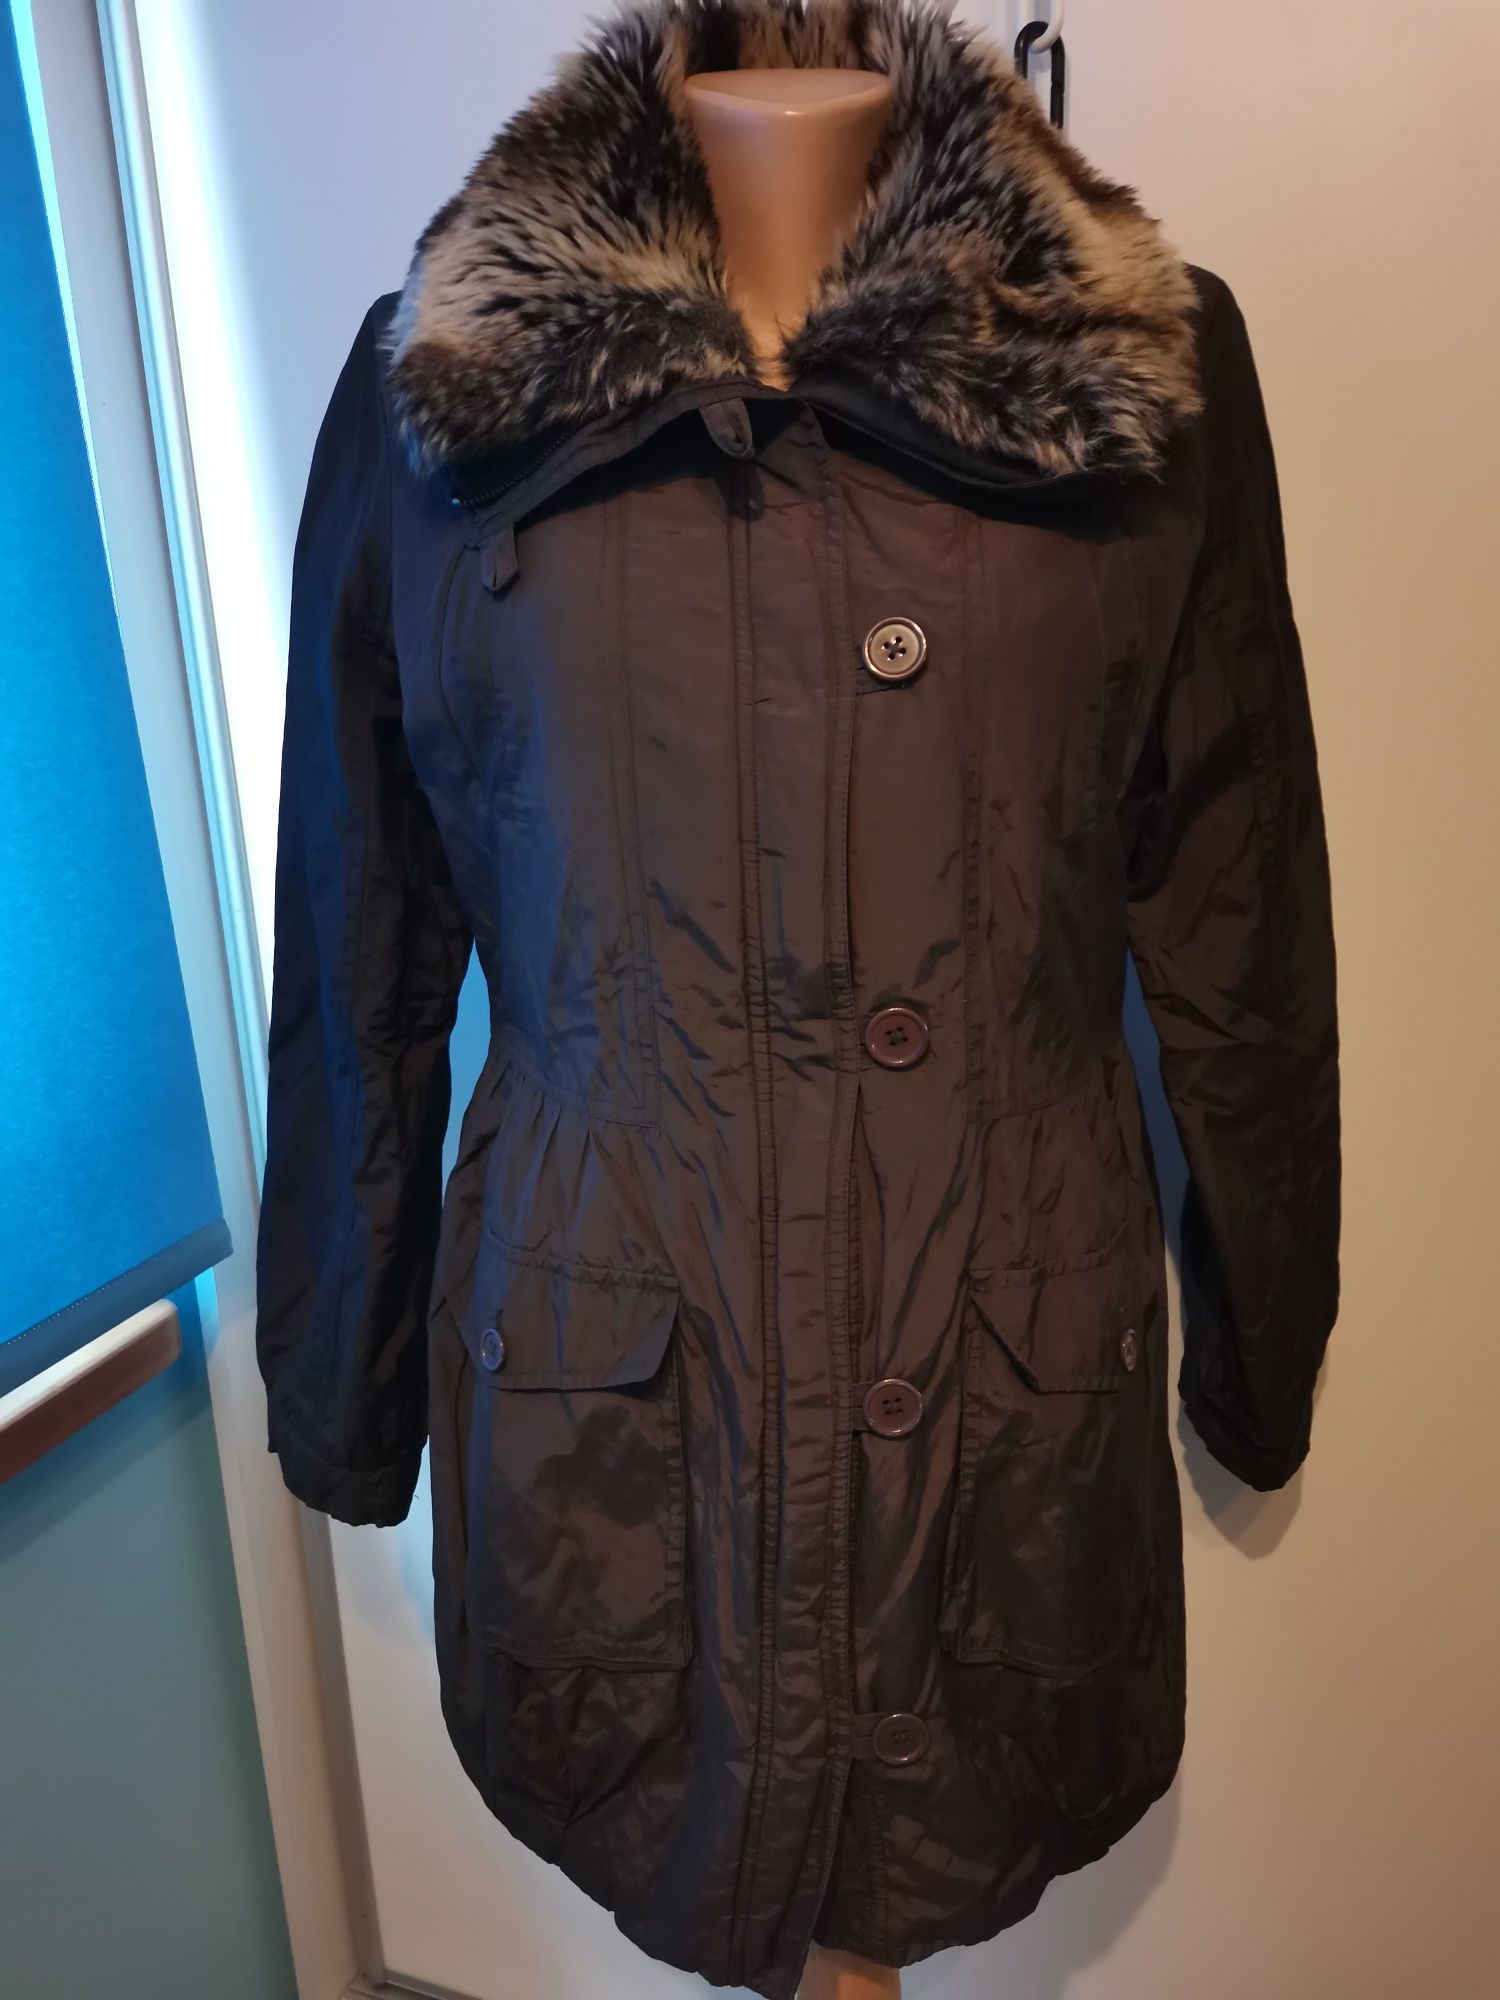 Marks&Spencer kurtka damska rozmiar 40, brąz, odpinane futerko, wiosna